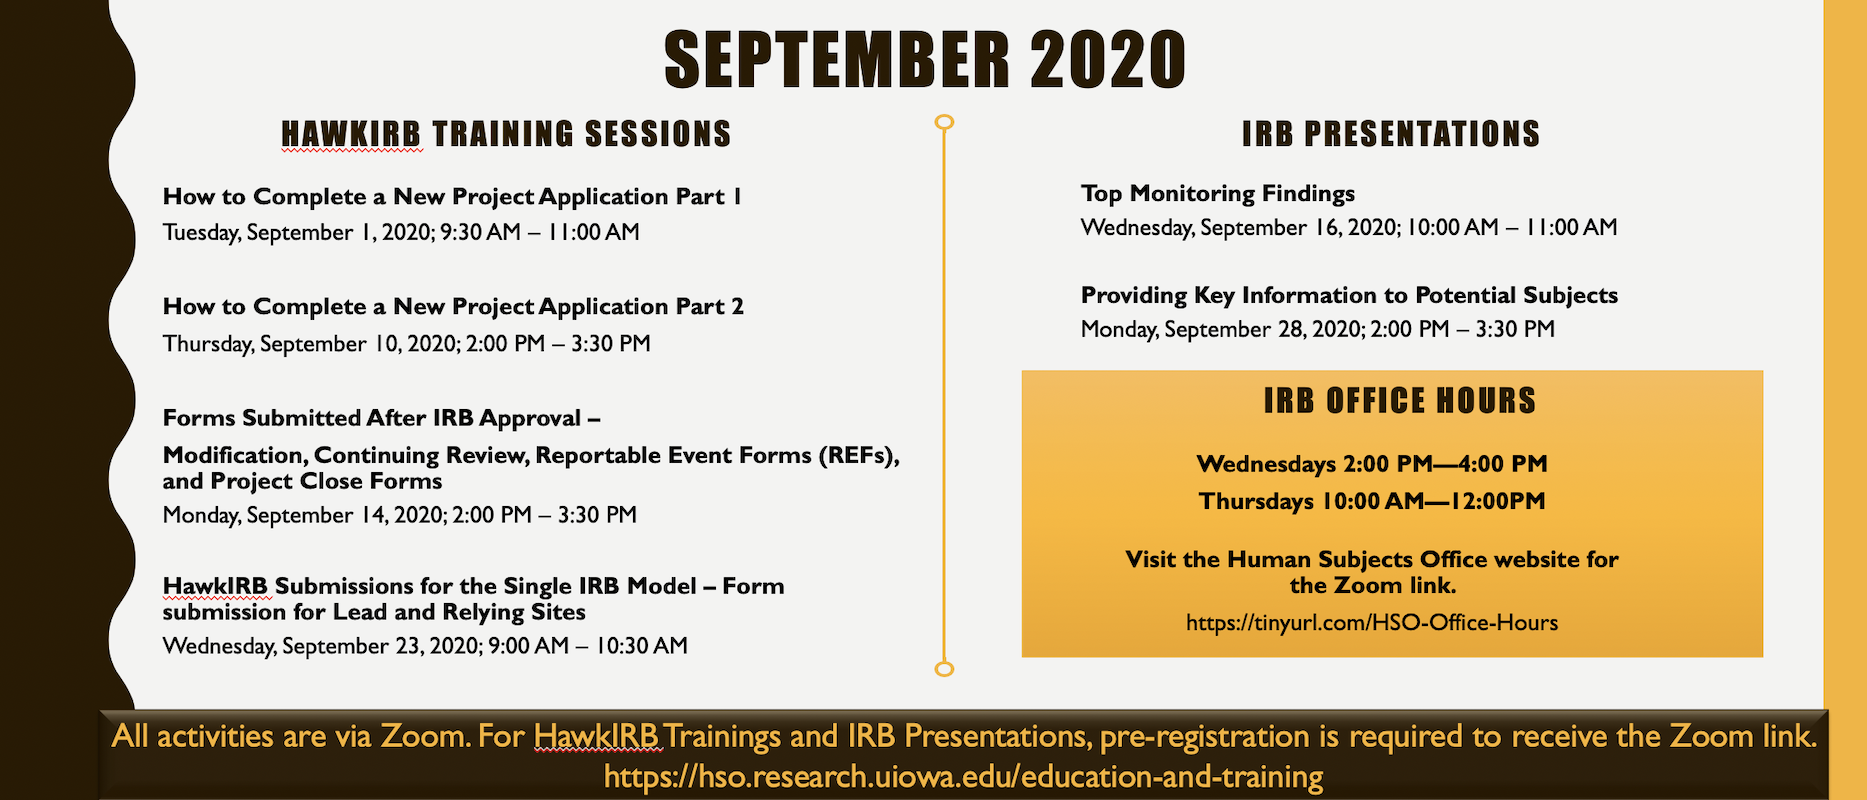 HawkIRB Training Sessions, IRB Presentations, and IRB Office